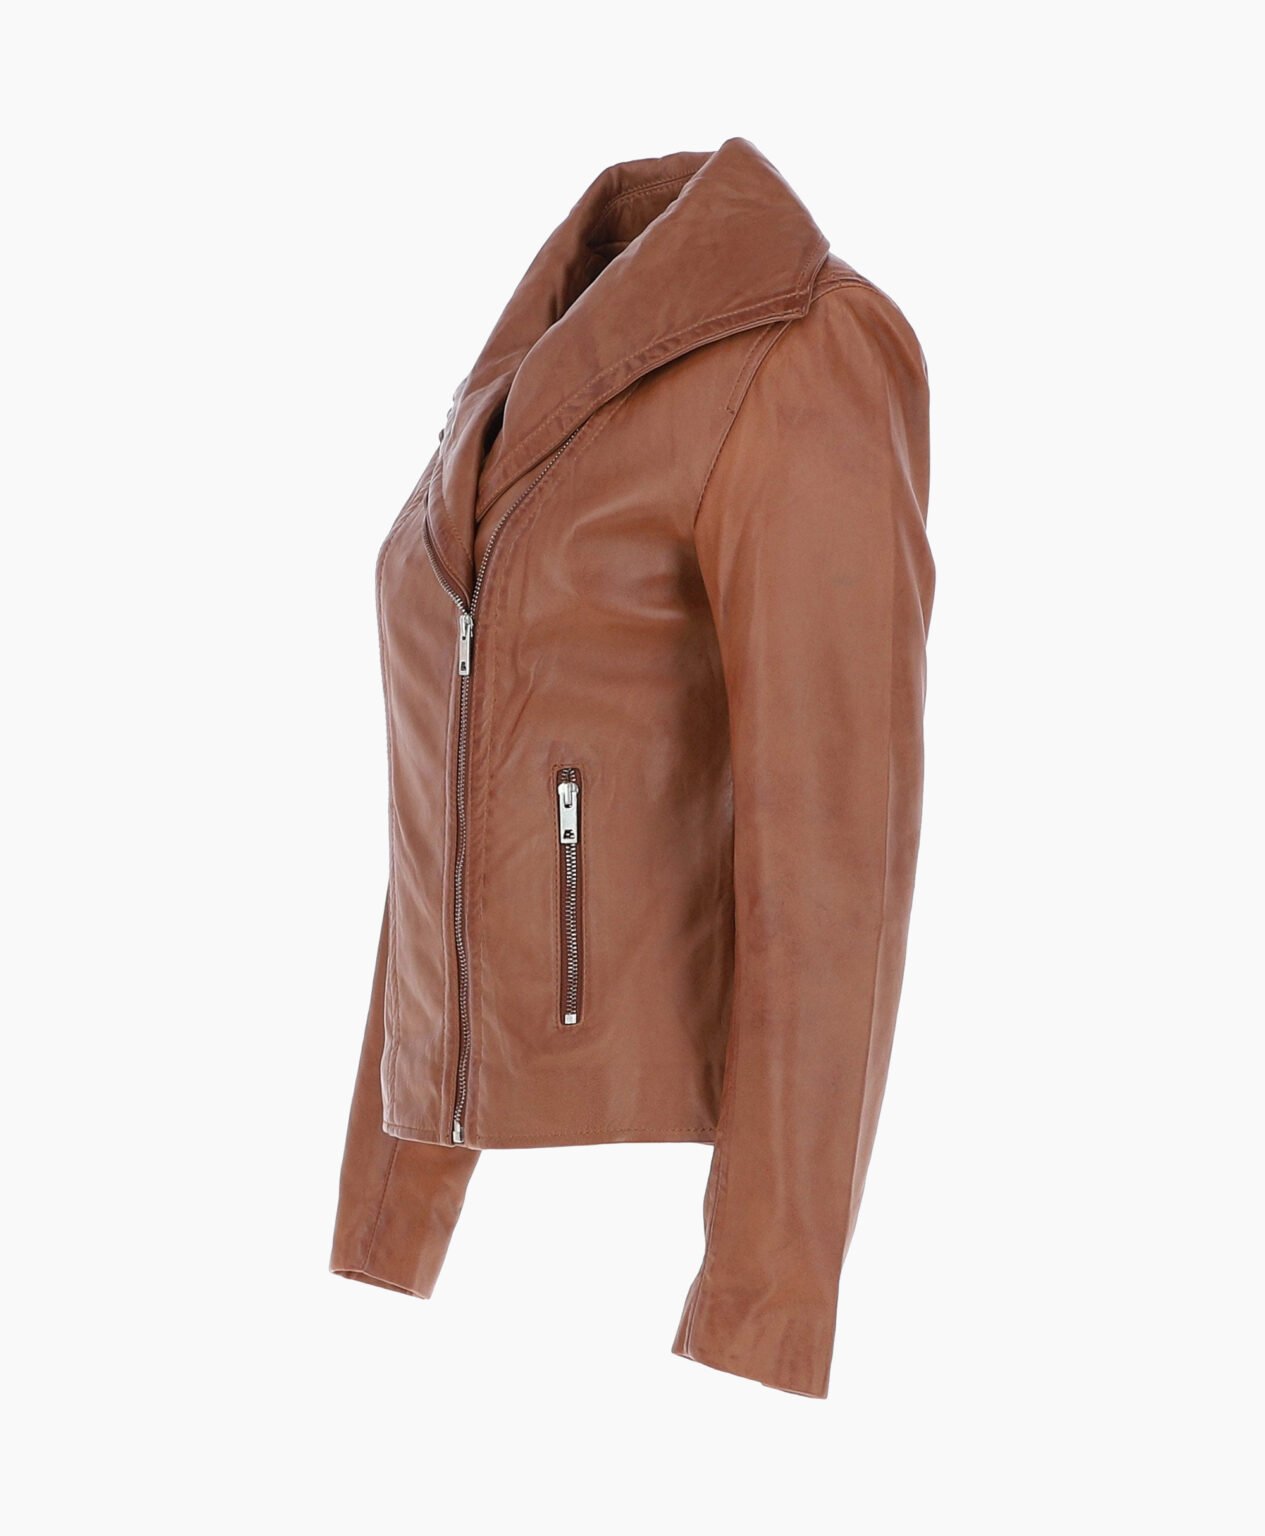 vogue-jacket-leather-jacket-fashion-collar-tan-shelby-image201